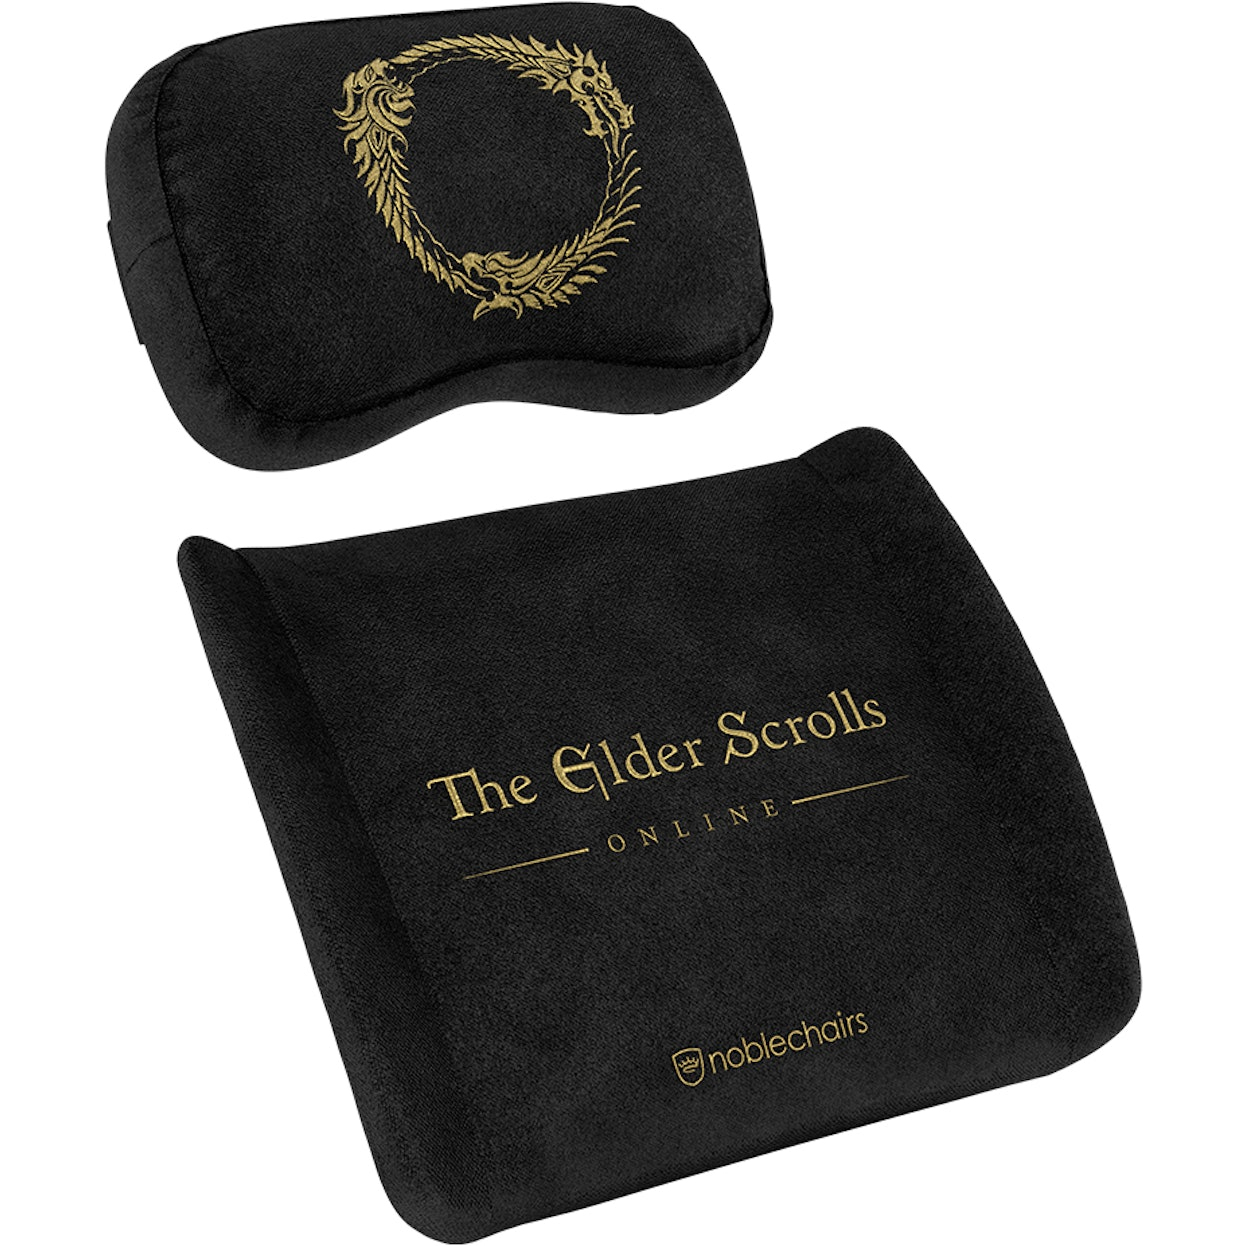 noblechairs - Set de Almofadas noblechairs Memory Foam - The Elder Scrolls Online Edition